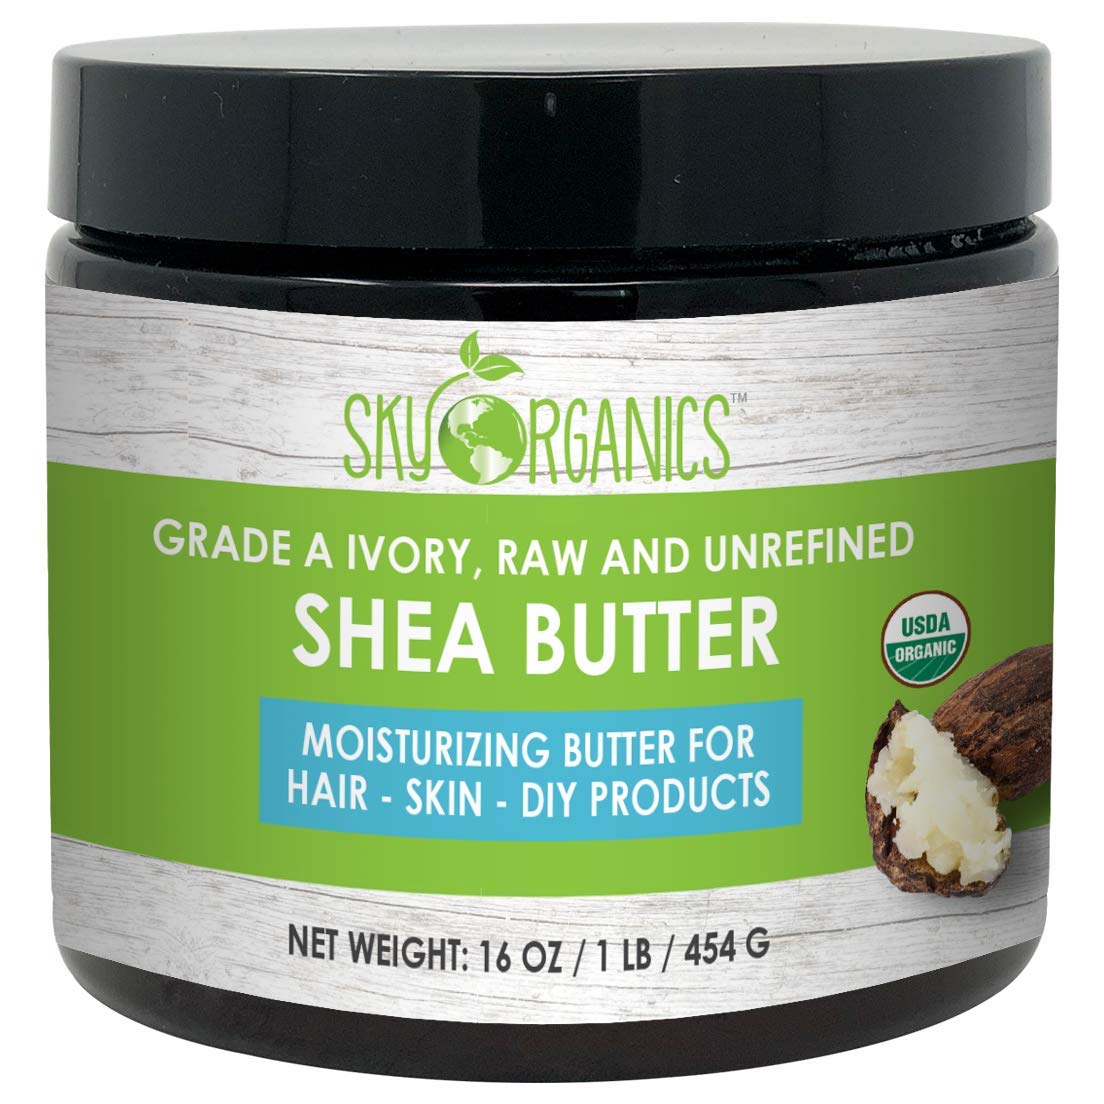 Organic Raw Unrefined Shea Butter by Sky Organics